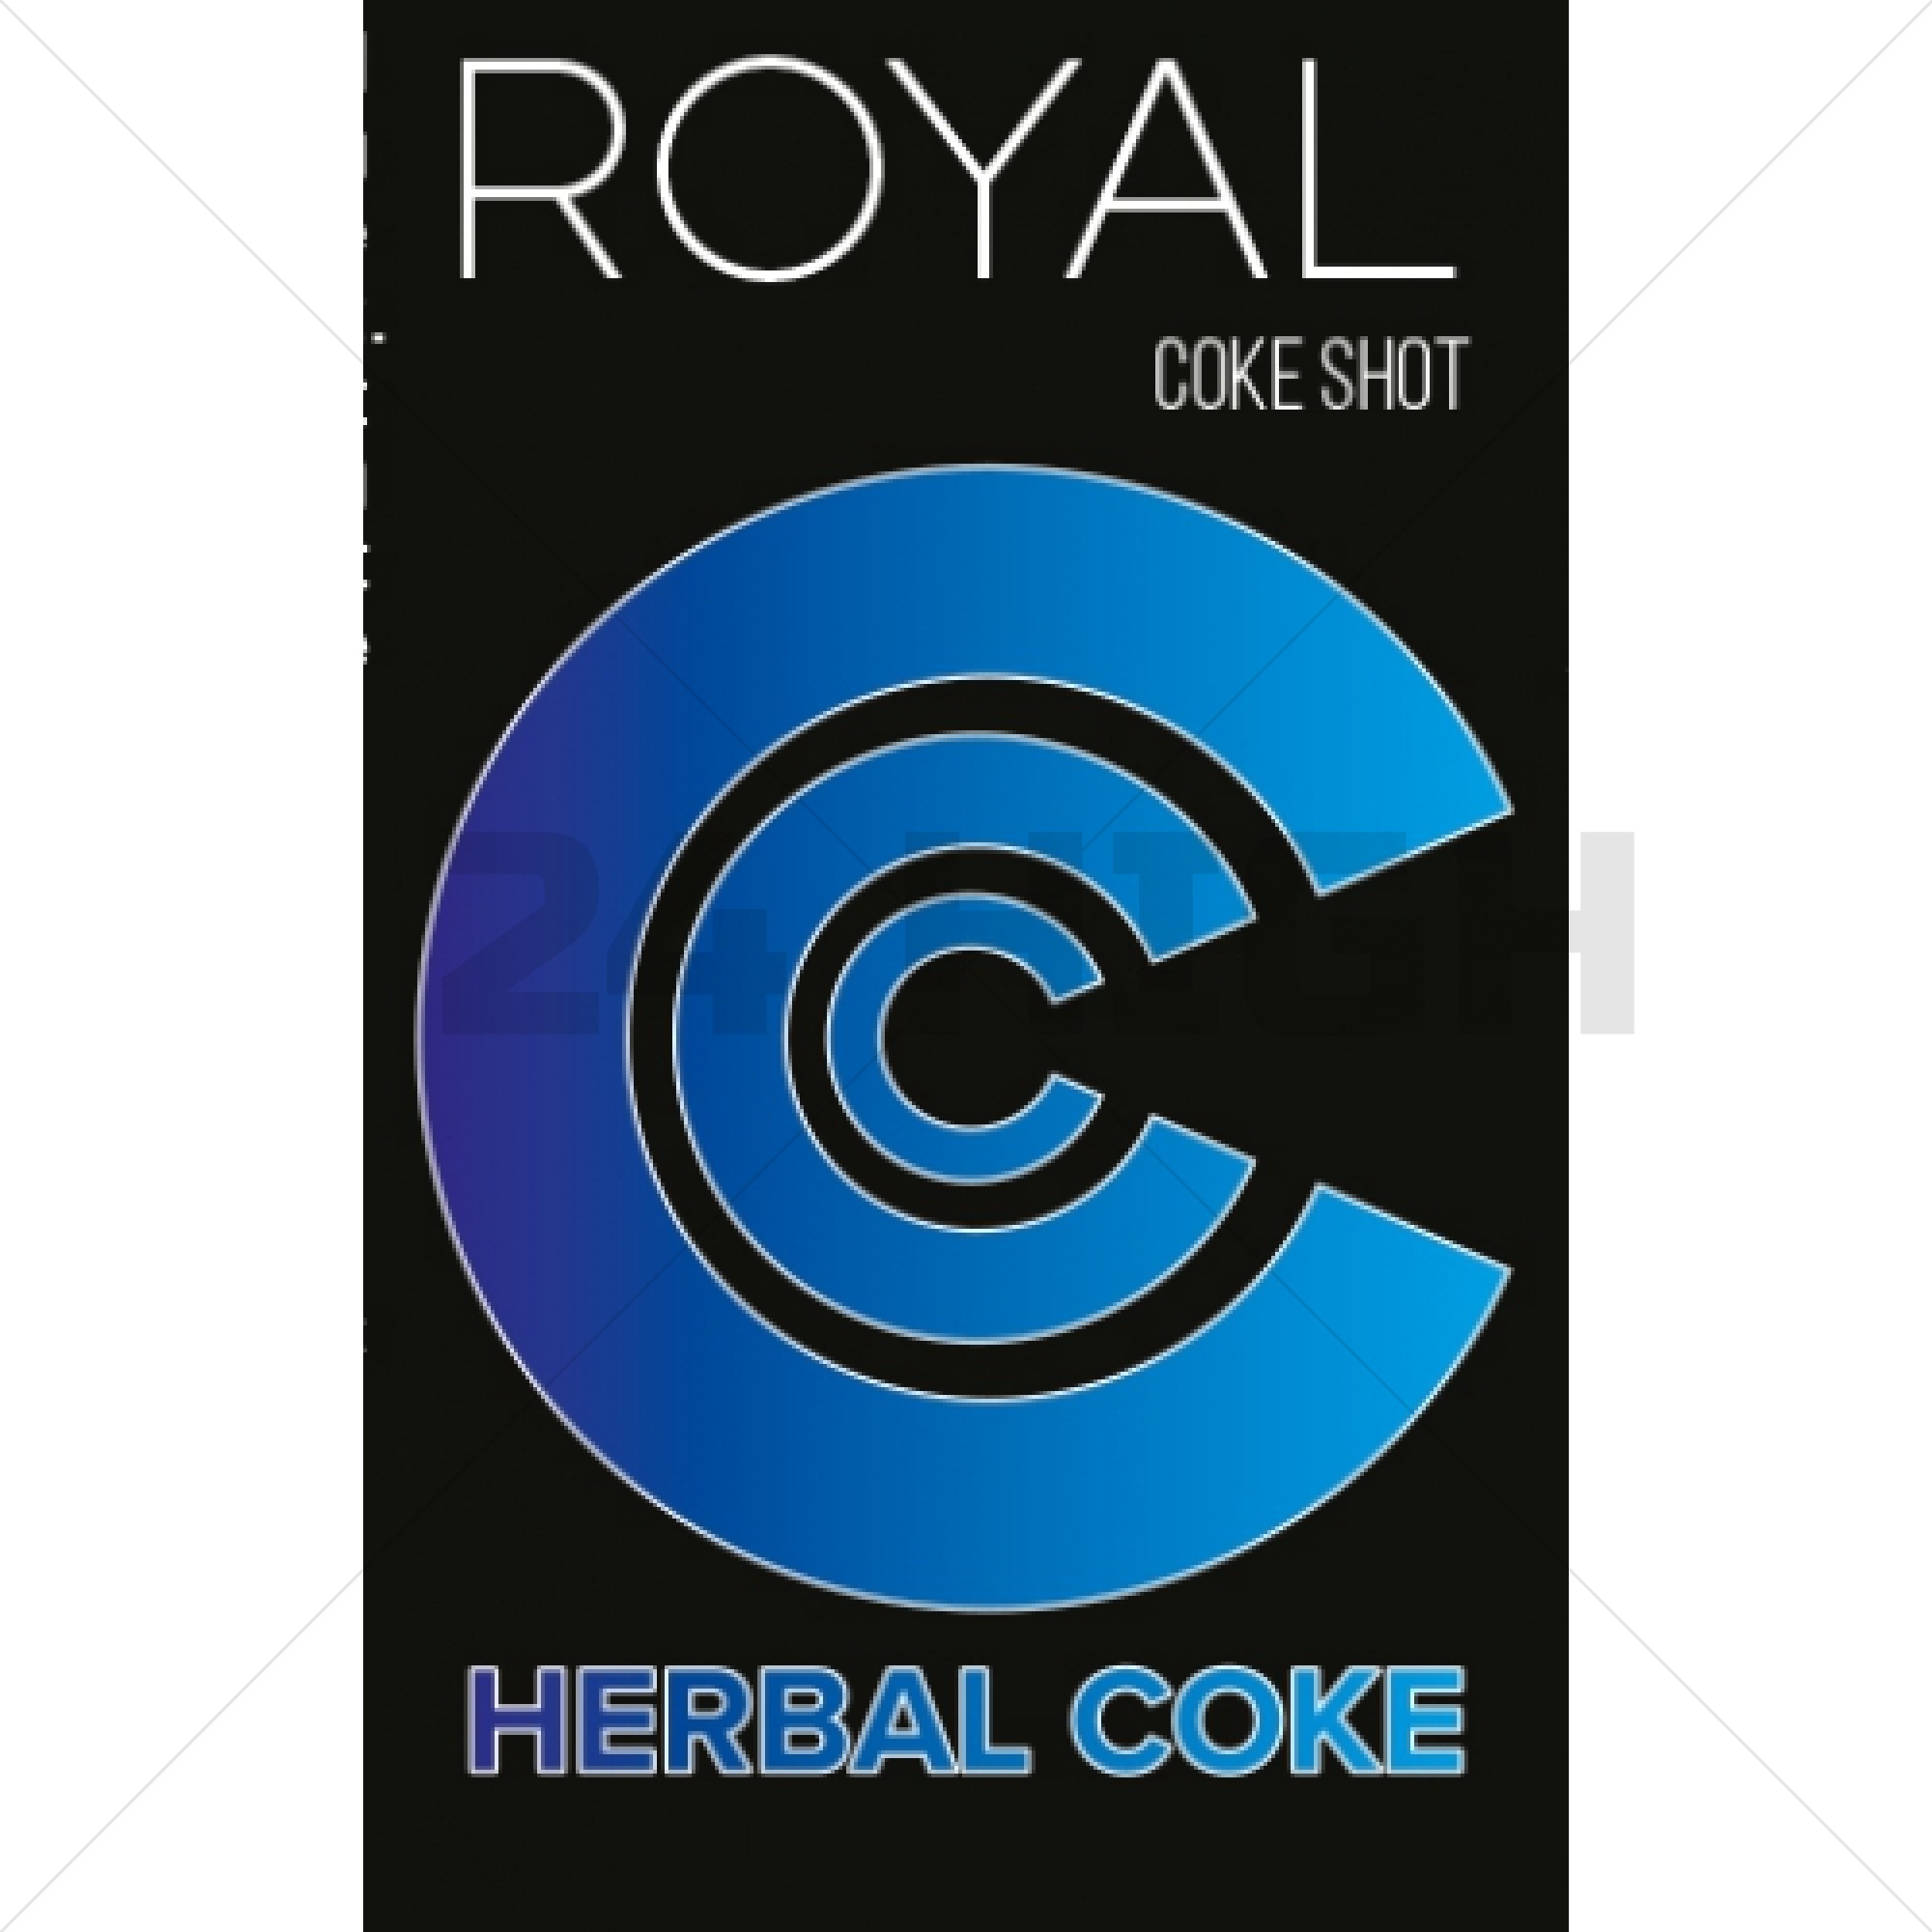 Royal Coke